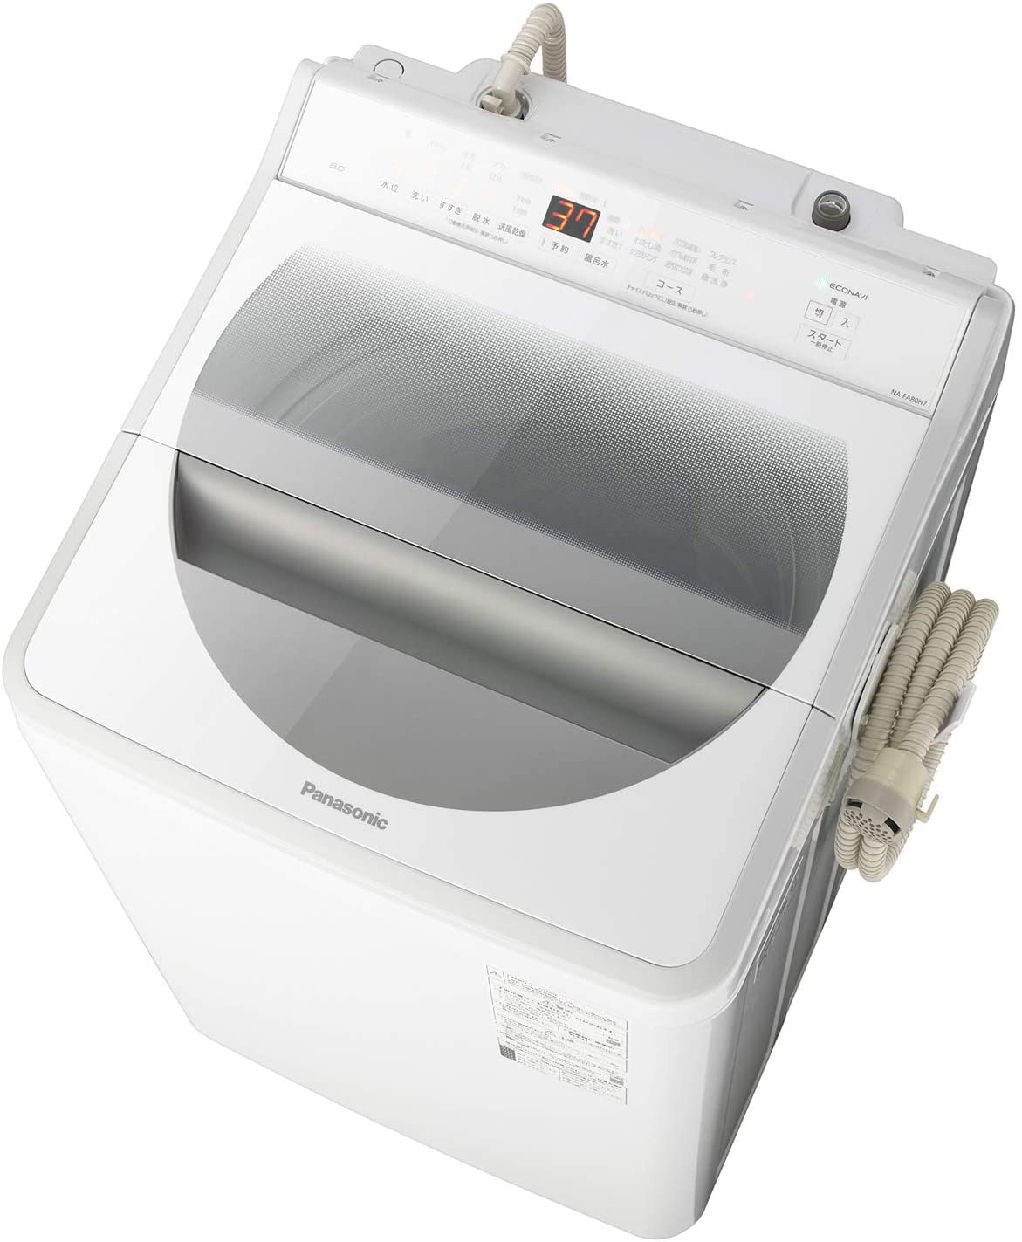 Panasonic(パナソニック) 全自動洗濯機 NA-FA80H7の商品画像2 